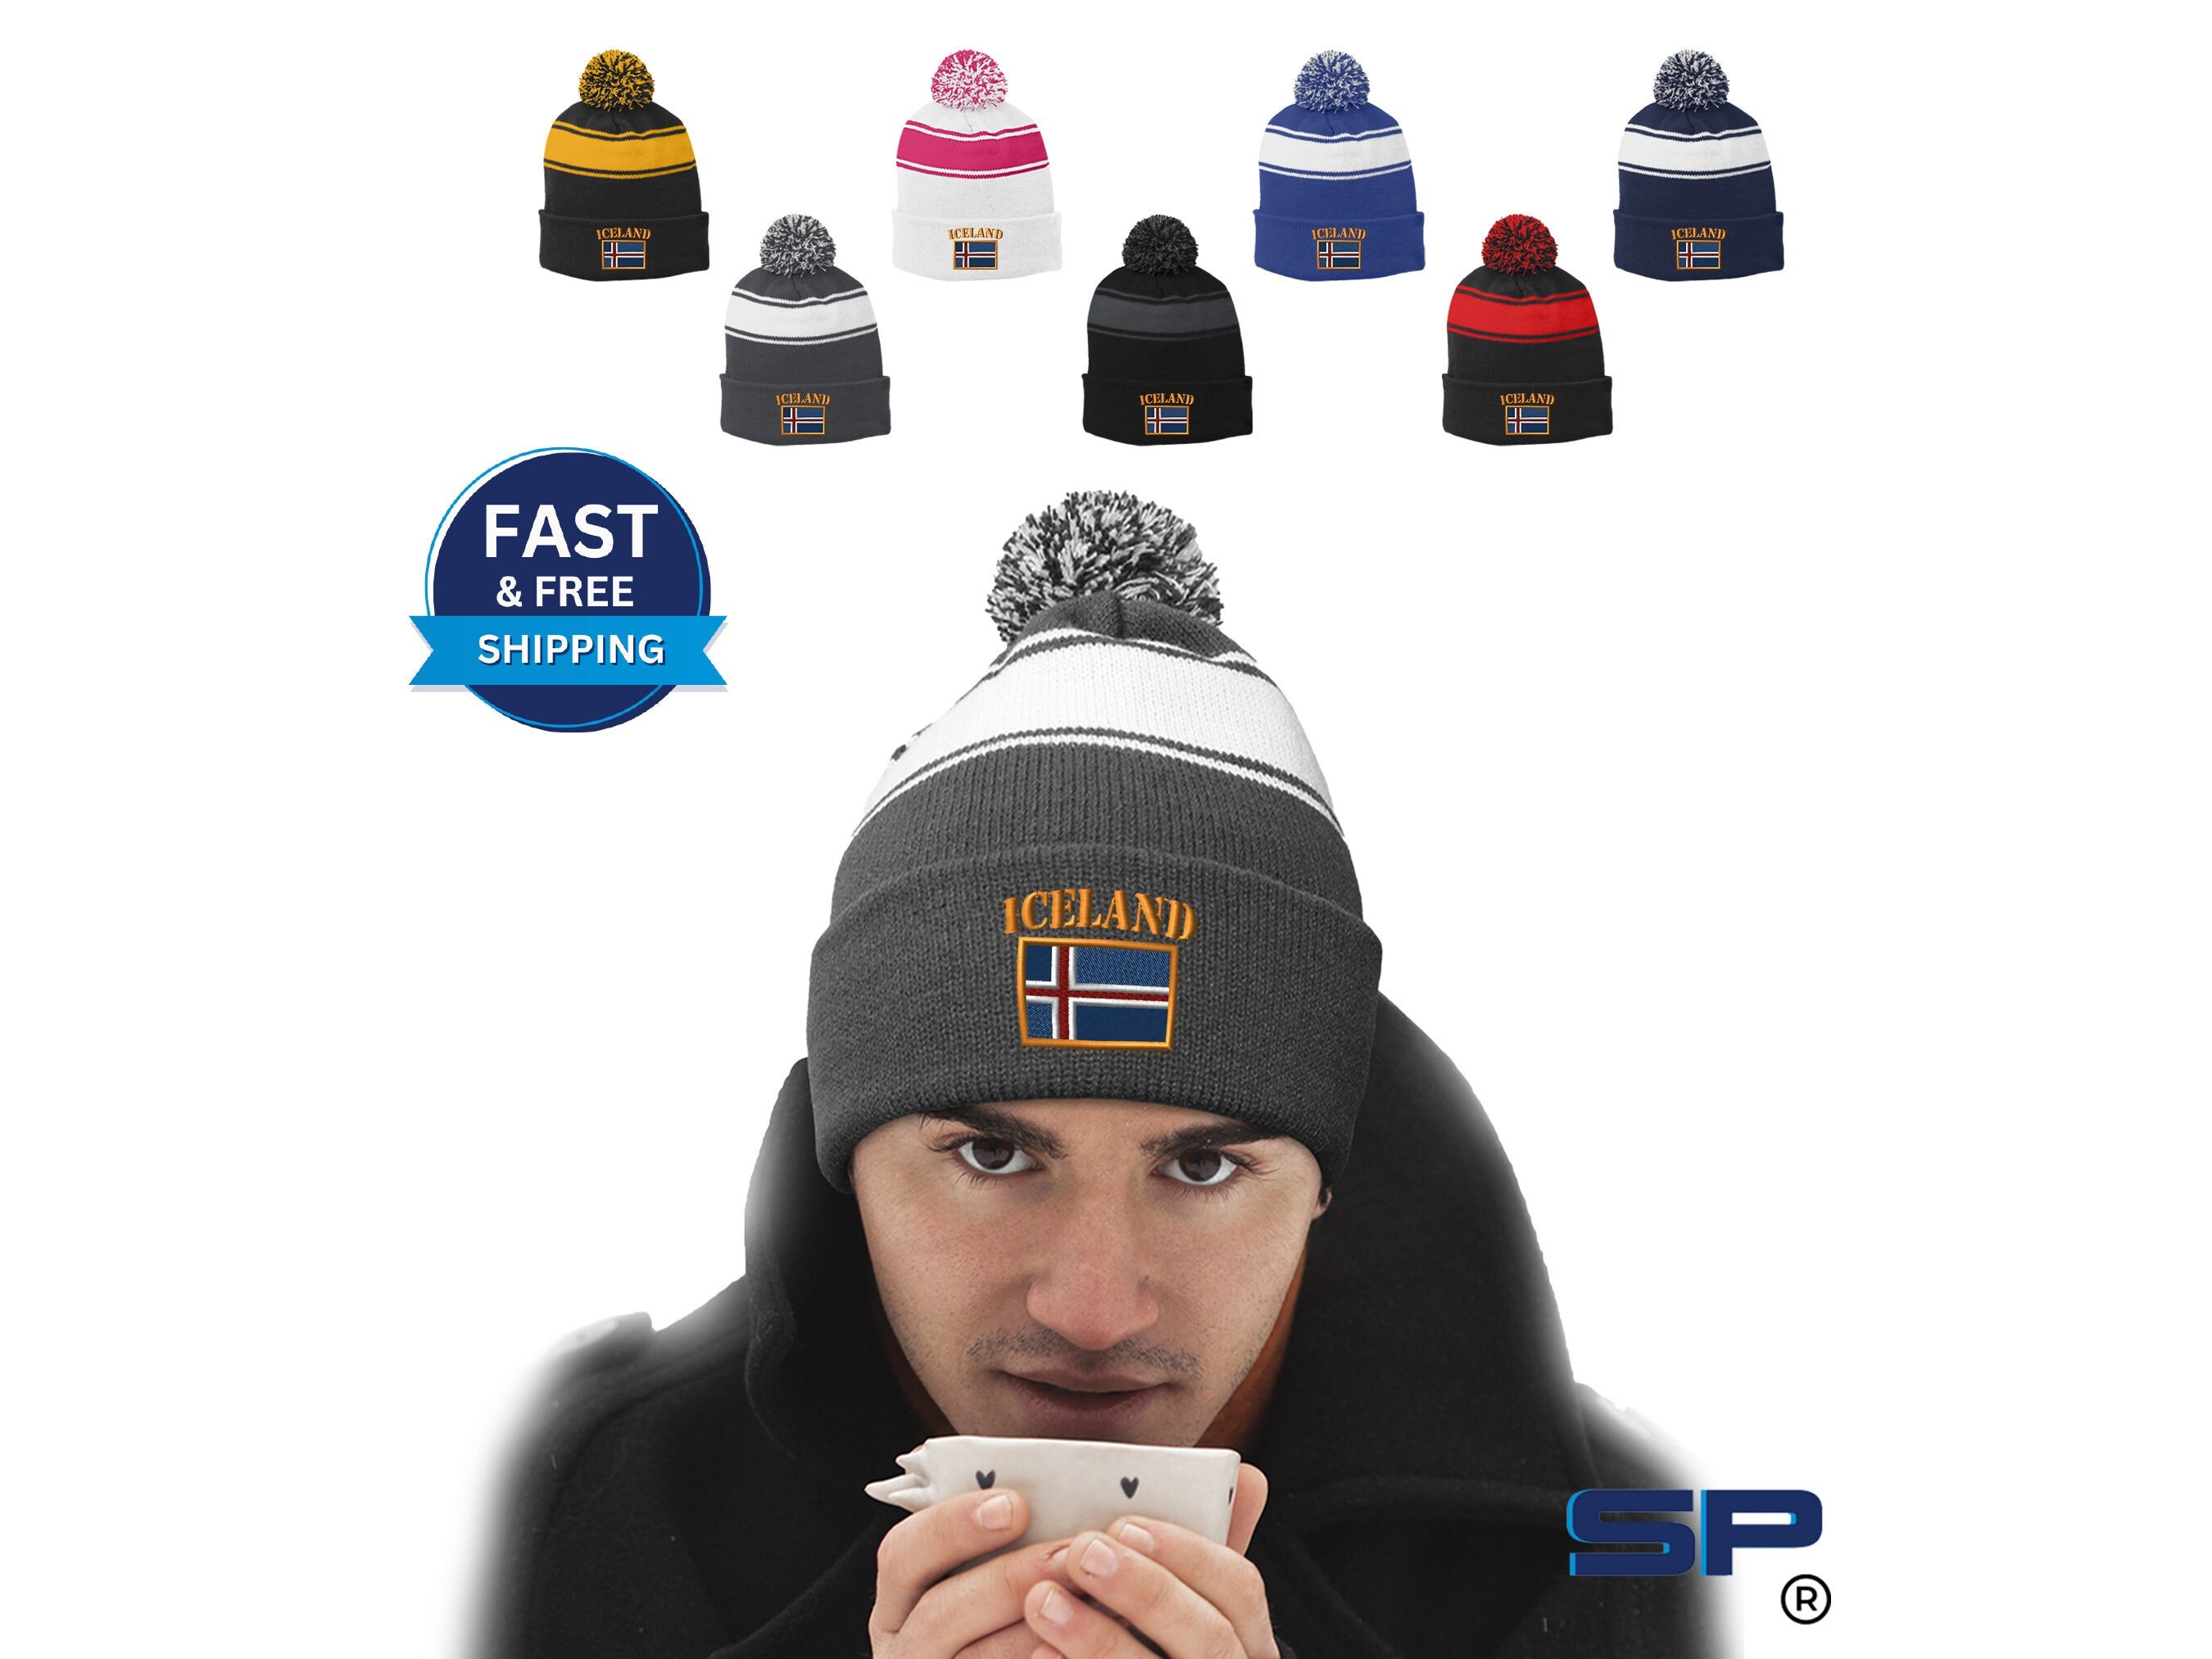 Hats with pompom – Mjúk Iceland